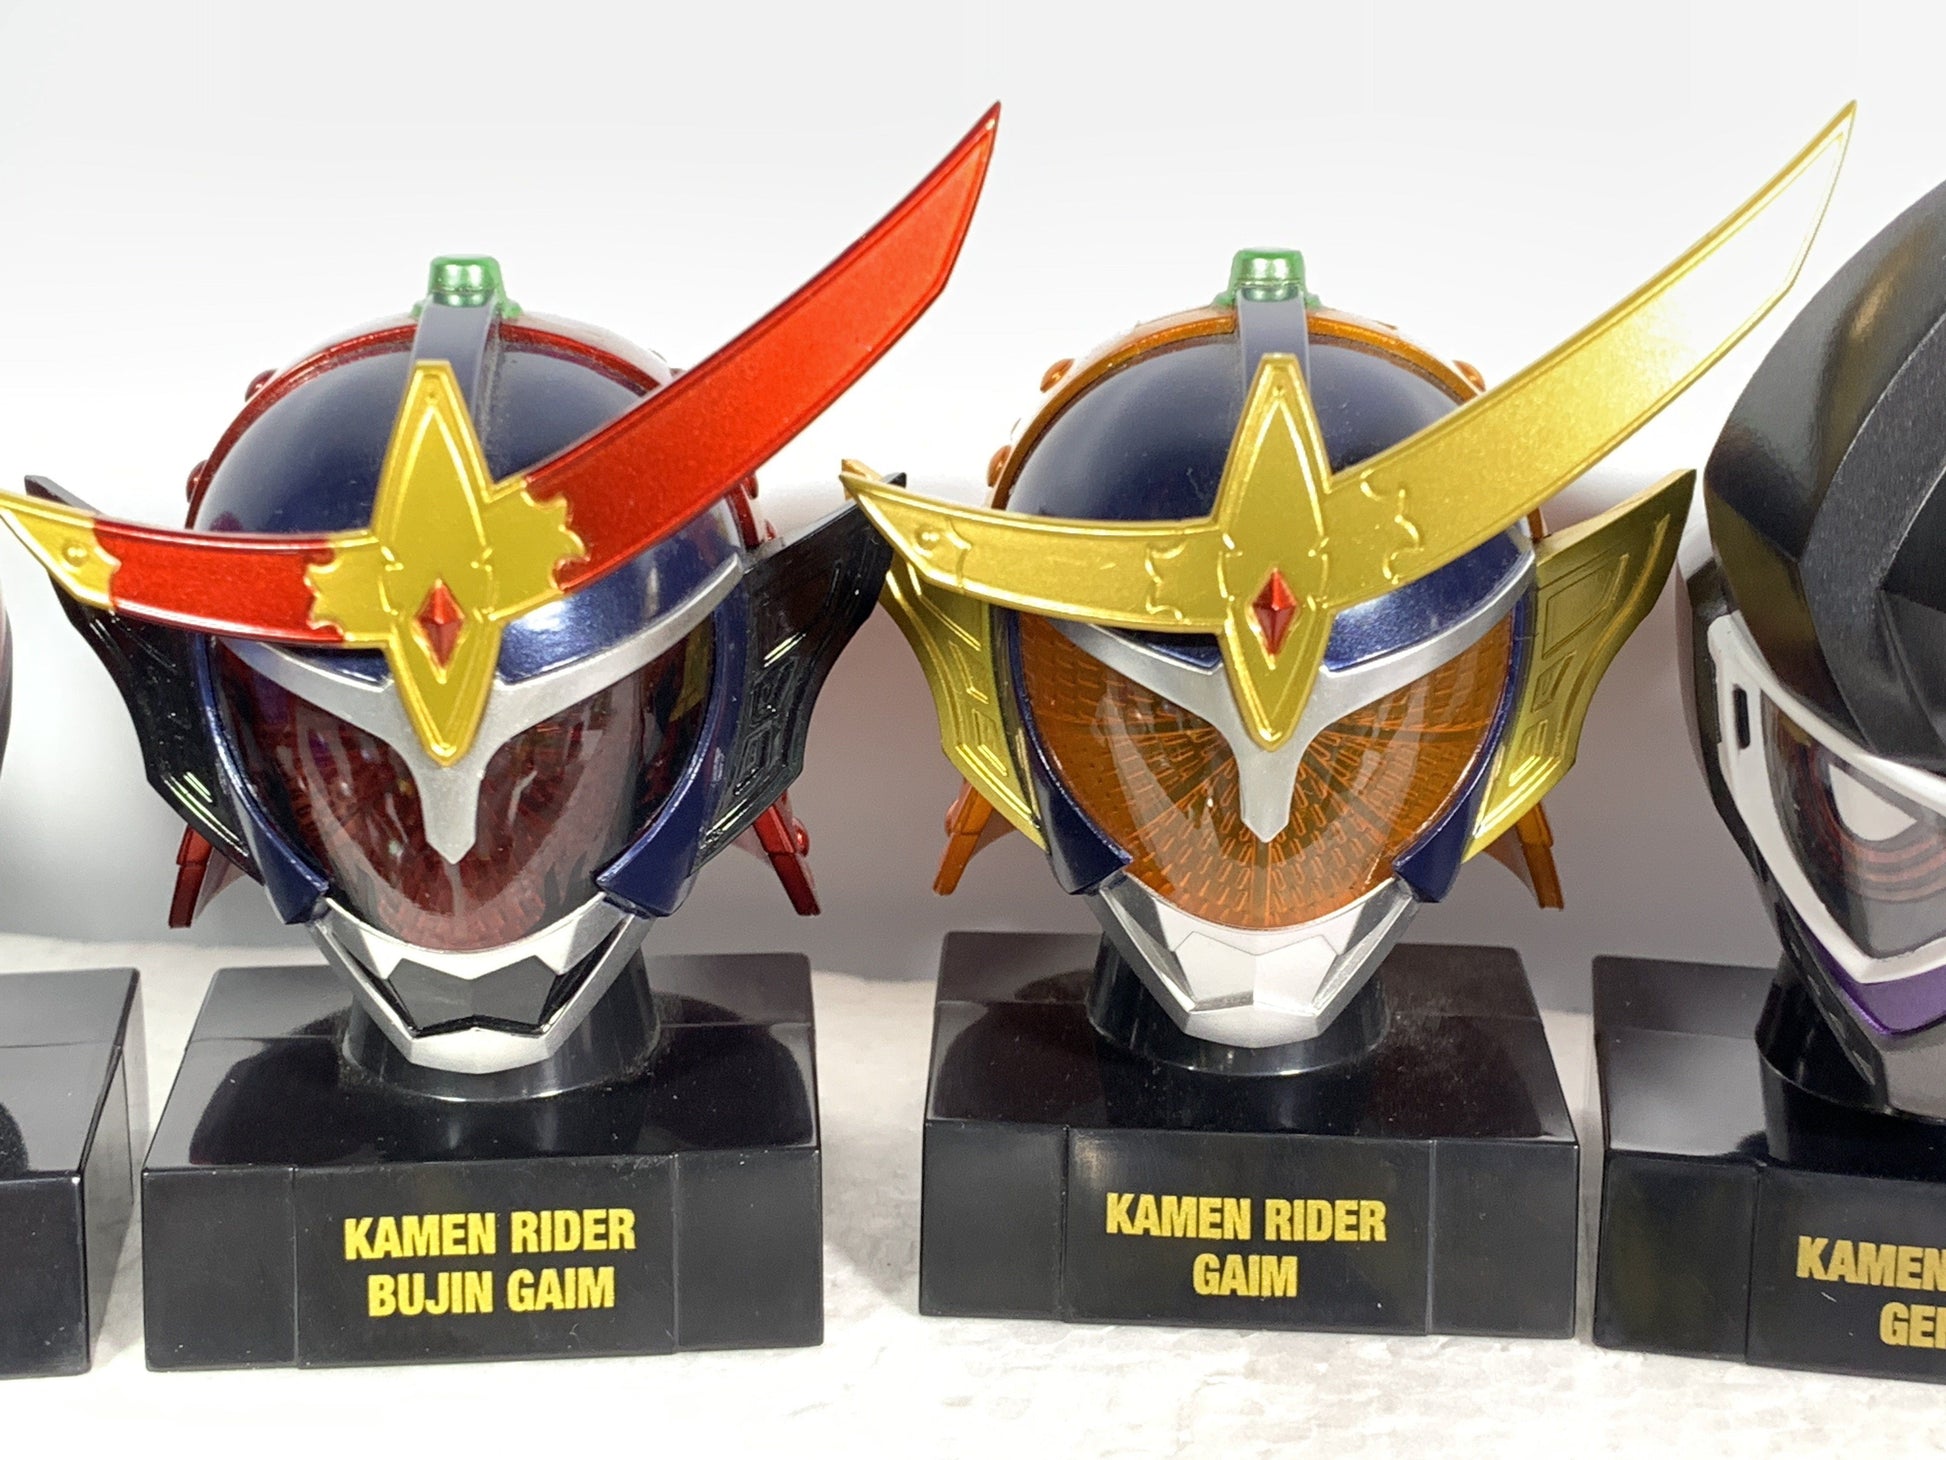 Candy Toy Kamen Rider Masker World Assorted Set | CSTOYS INTERNATIONAL